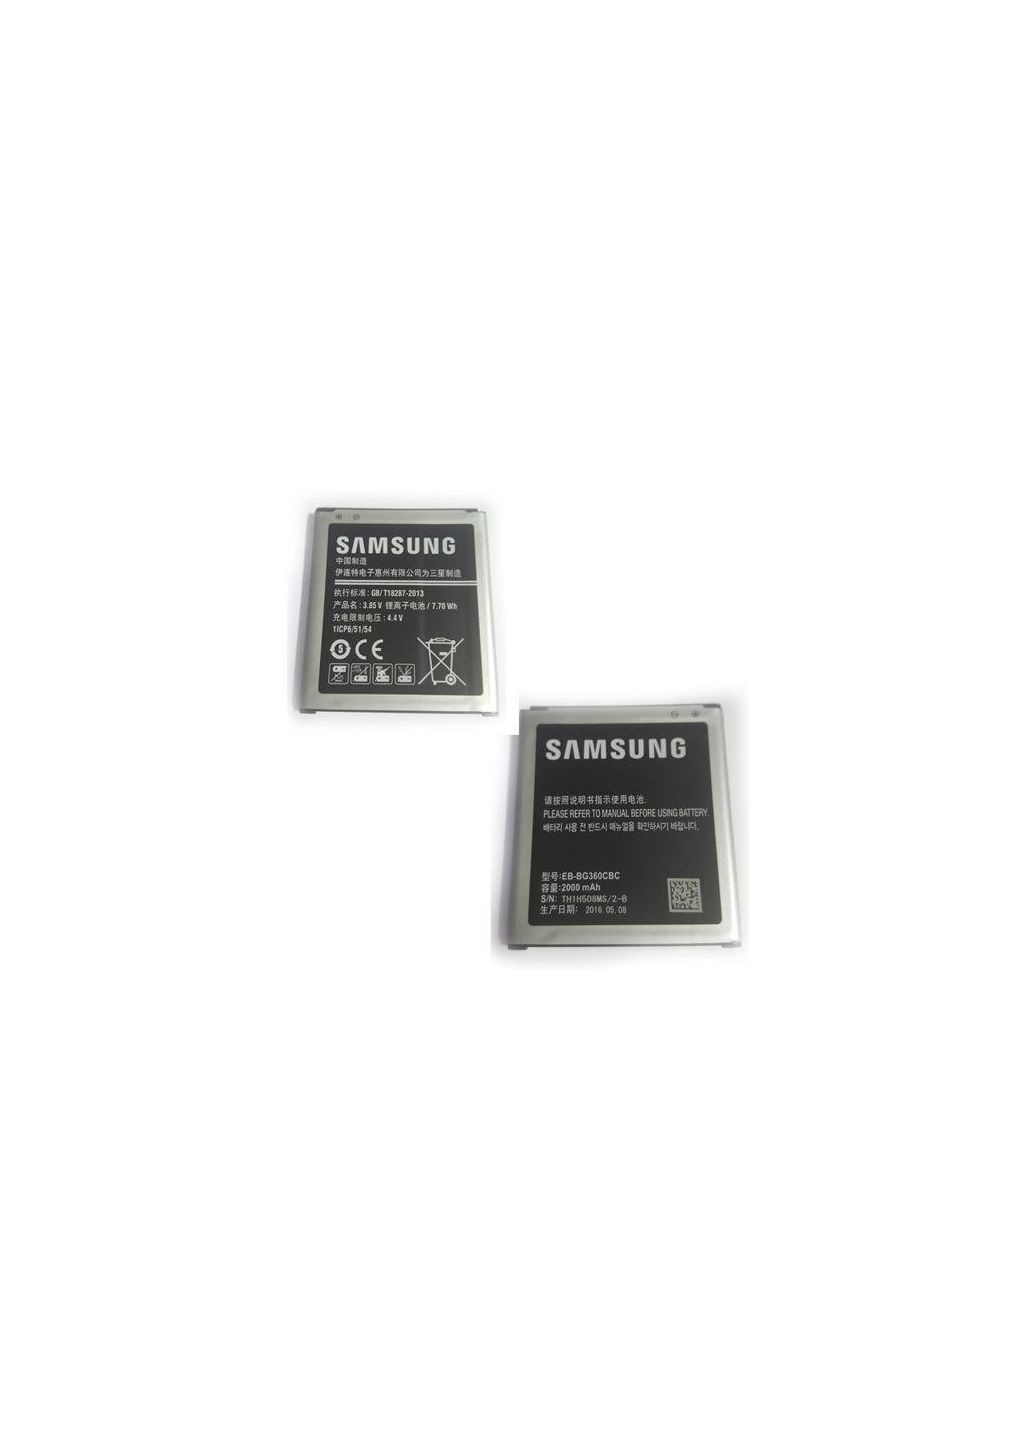 Акб G360 Core Prime G361 J200 акумулятор Samsung (279826188)